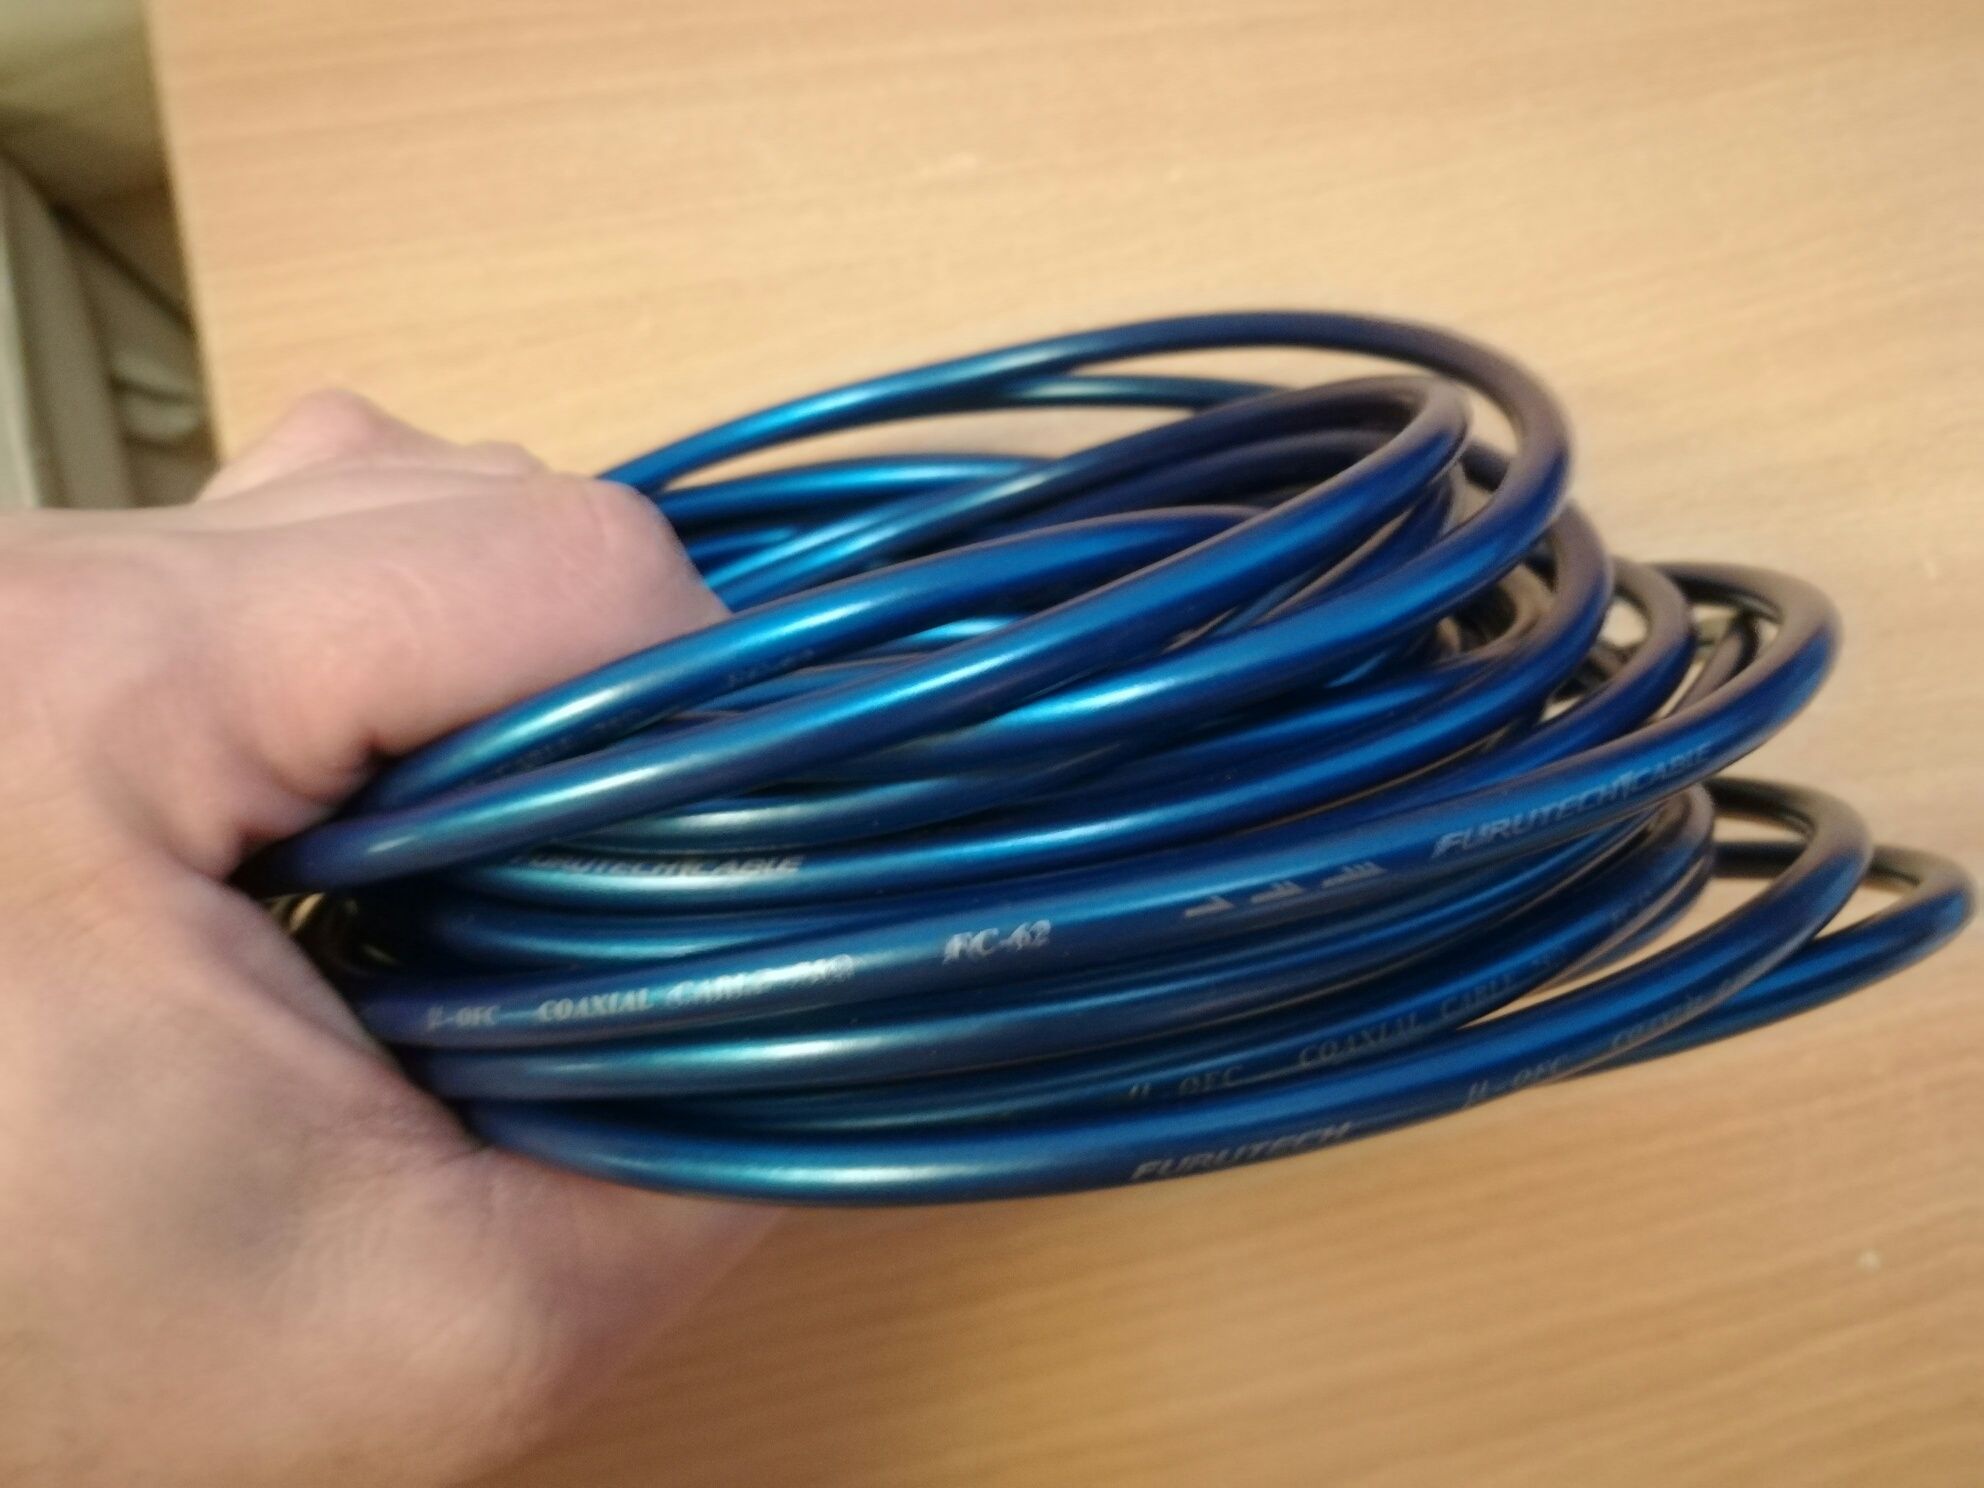 Furutech cable 11m koaksjalny